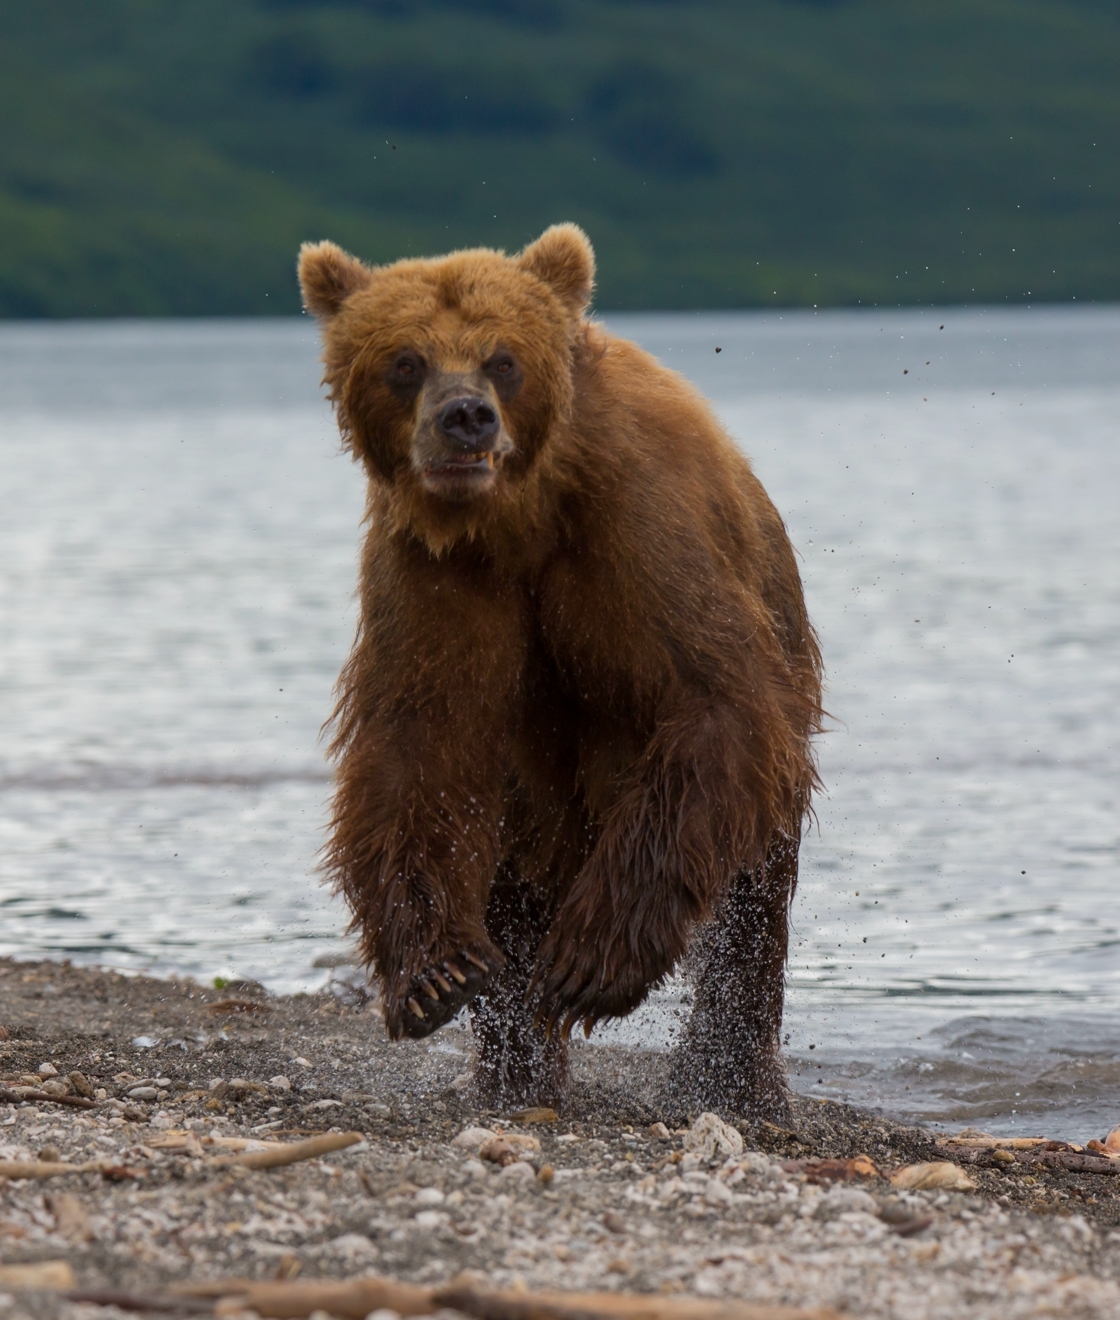 Описание фотографии камчатский бурый медведь. Бурый медведь Камчатки. Камчатский бурый медведь. Камчатский бурый. Бурый медведь Камчатский медведь.